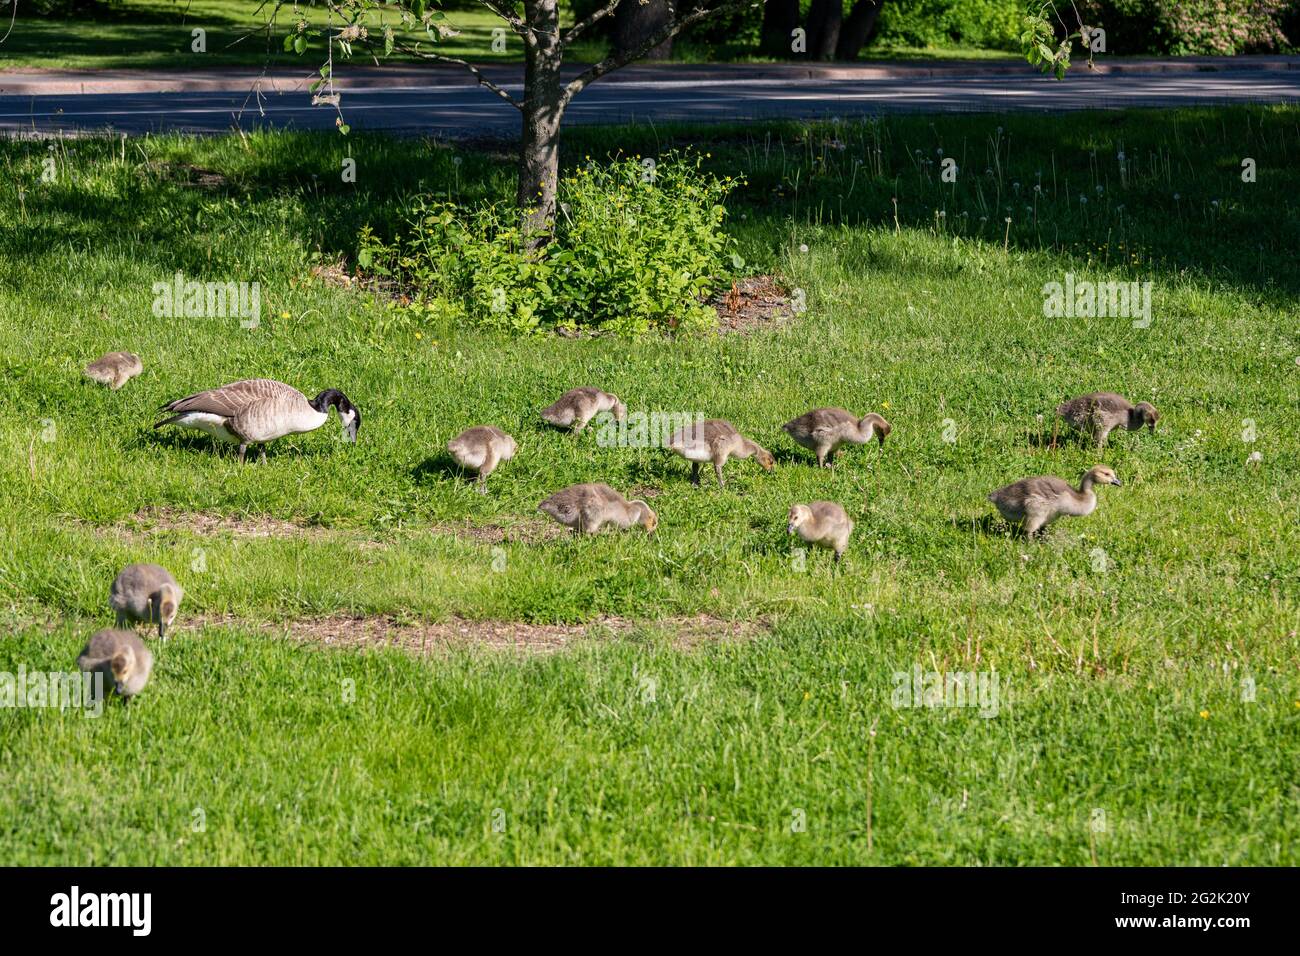 Canada goose (Branta canadensis) with goslings on roadside in Munkkiniemi district of Helsinki, Finland Stock Photo